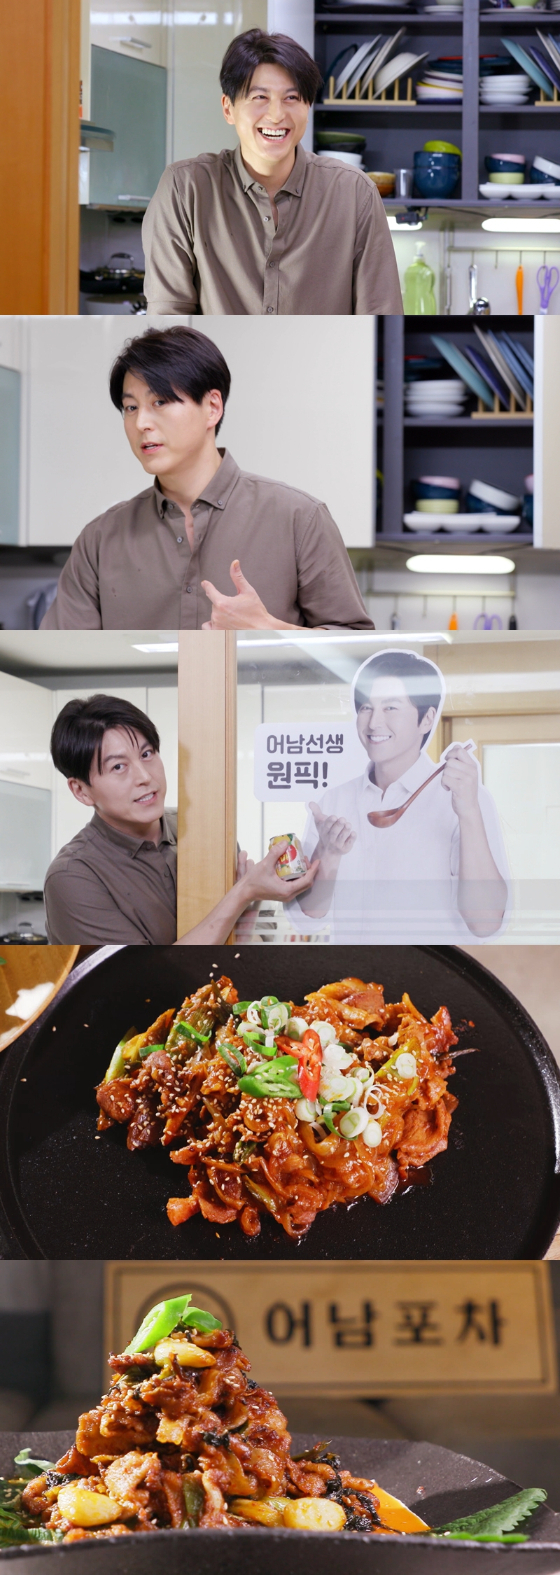 KBS 2TV '신상출시 편스토랑'에서 류수영이 제육볶음 레시피를 공개한다./사진=KBS 2TV '신상출시 편스토랑'